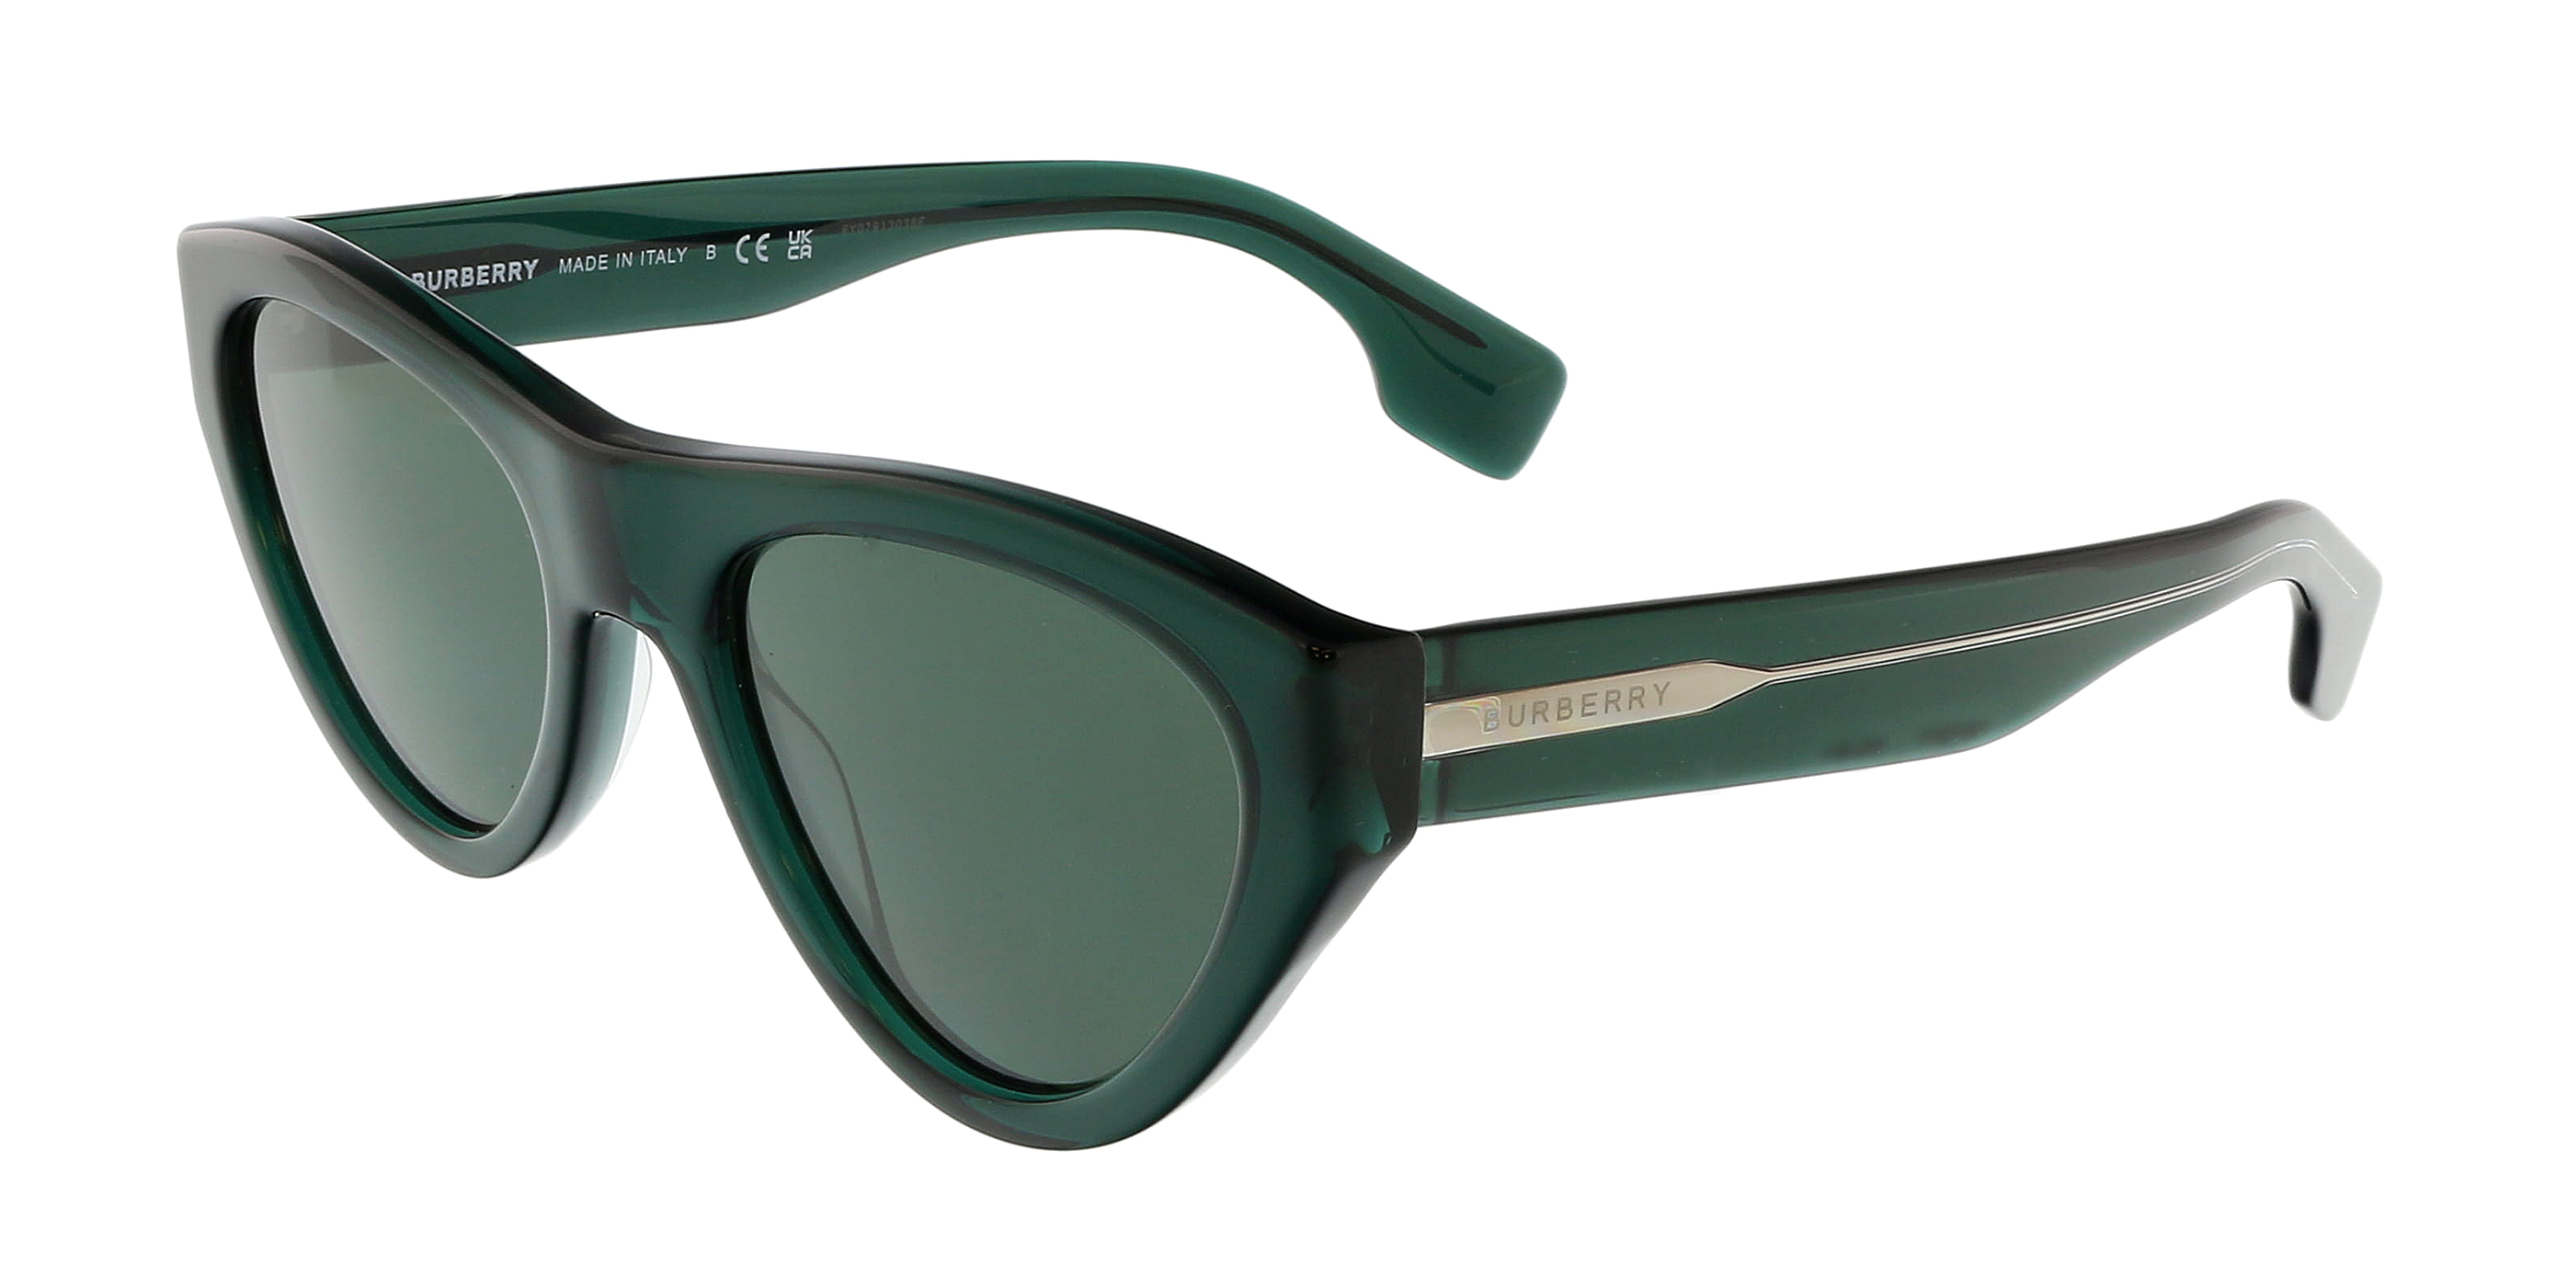 Burberry Cateye Sunglasses Tranwsparent Green (0BE4285 379571) in 